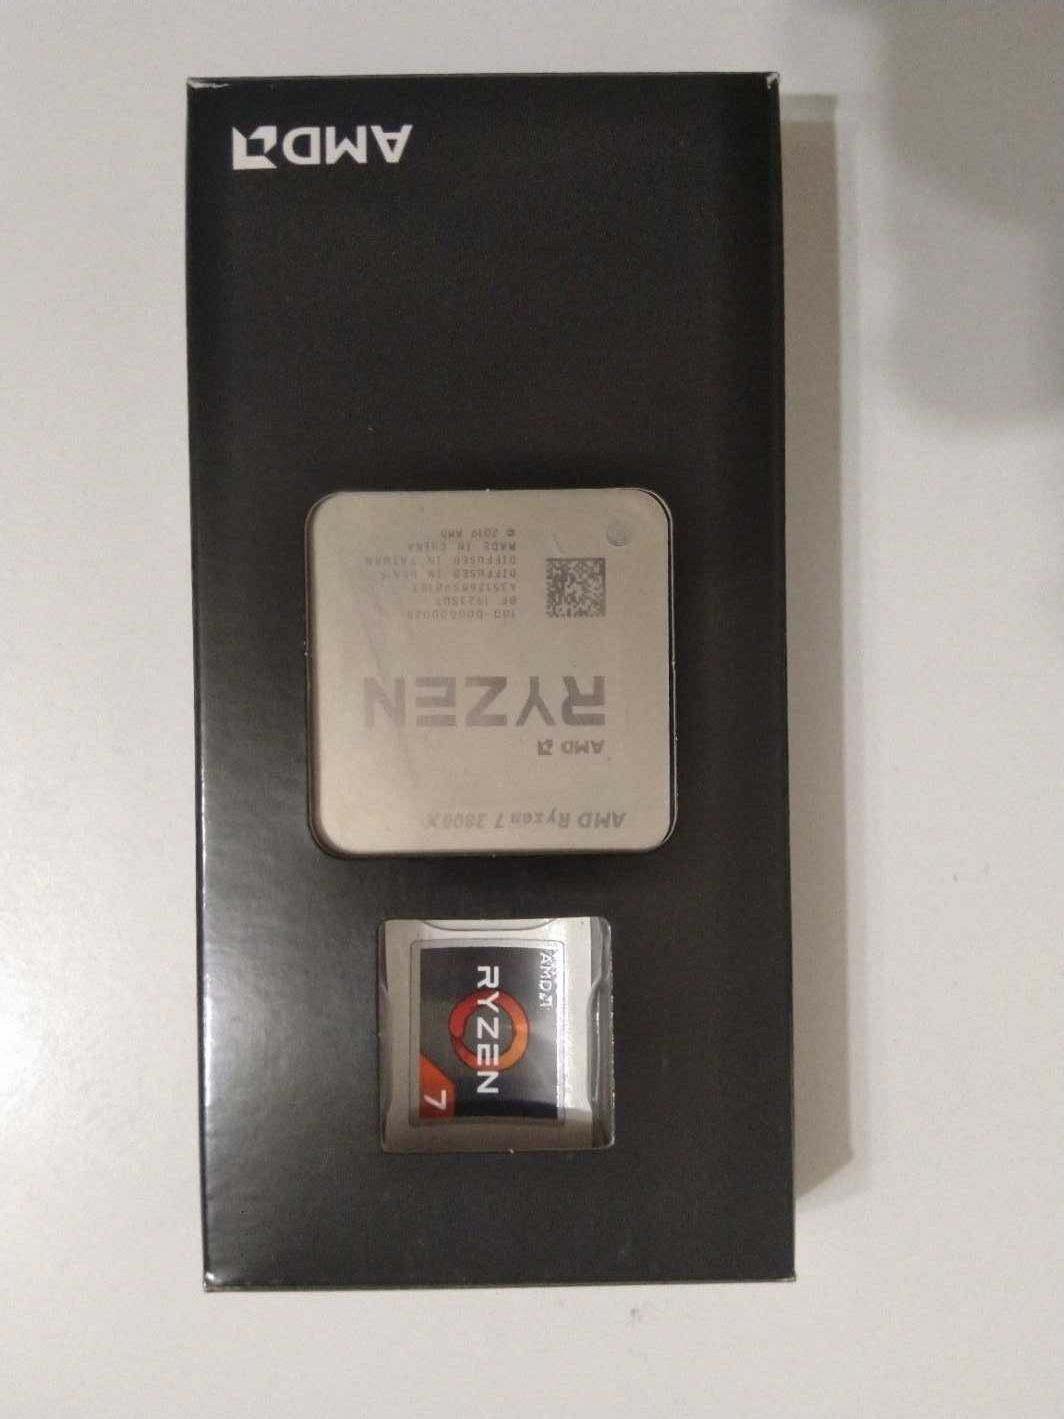 Процессор AMD Ryzen 7 3800X 3.9(4.5)GHz 32MB sAM4 Box